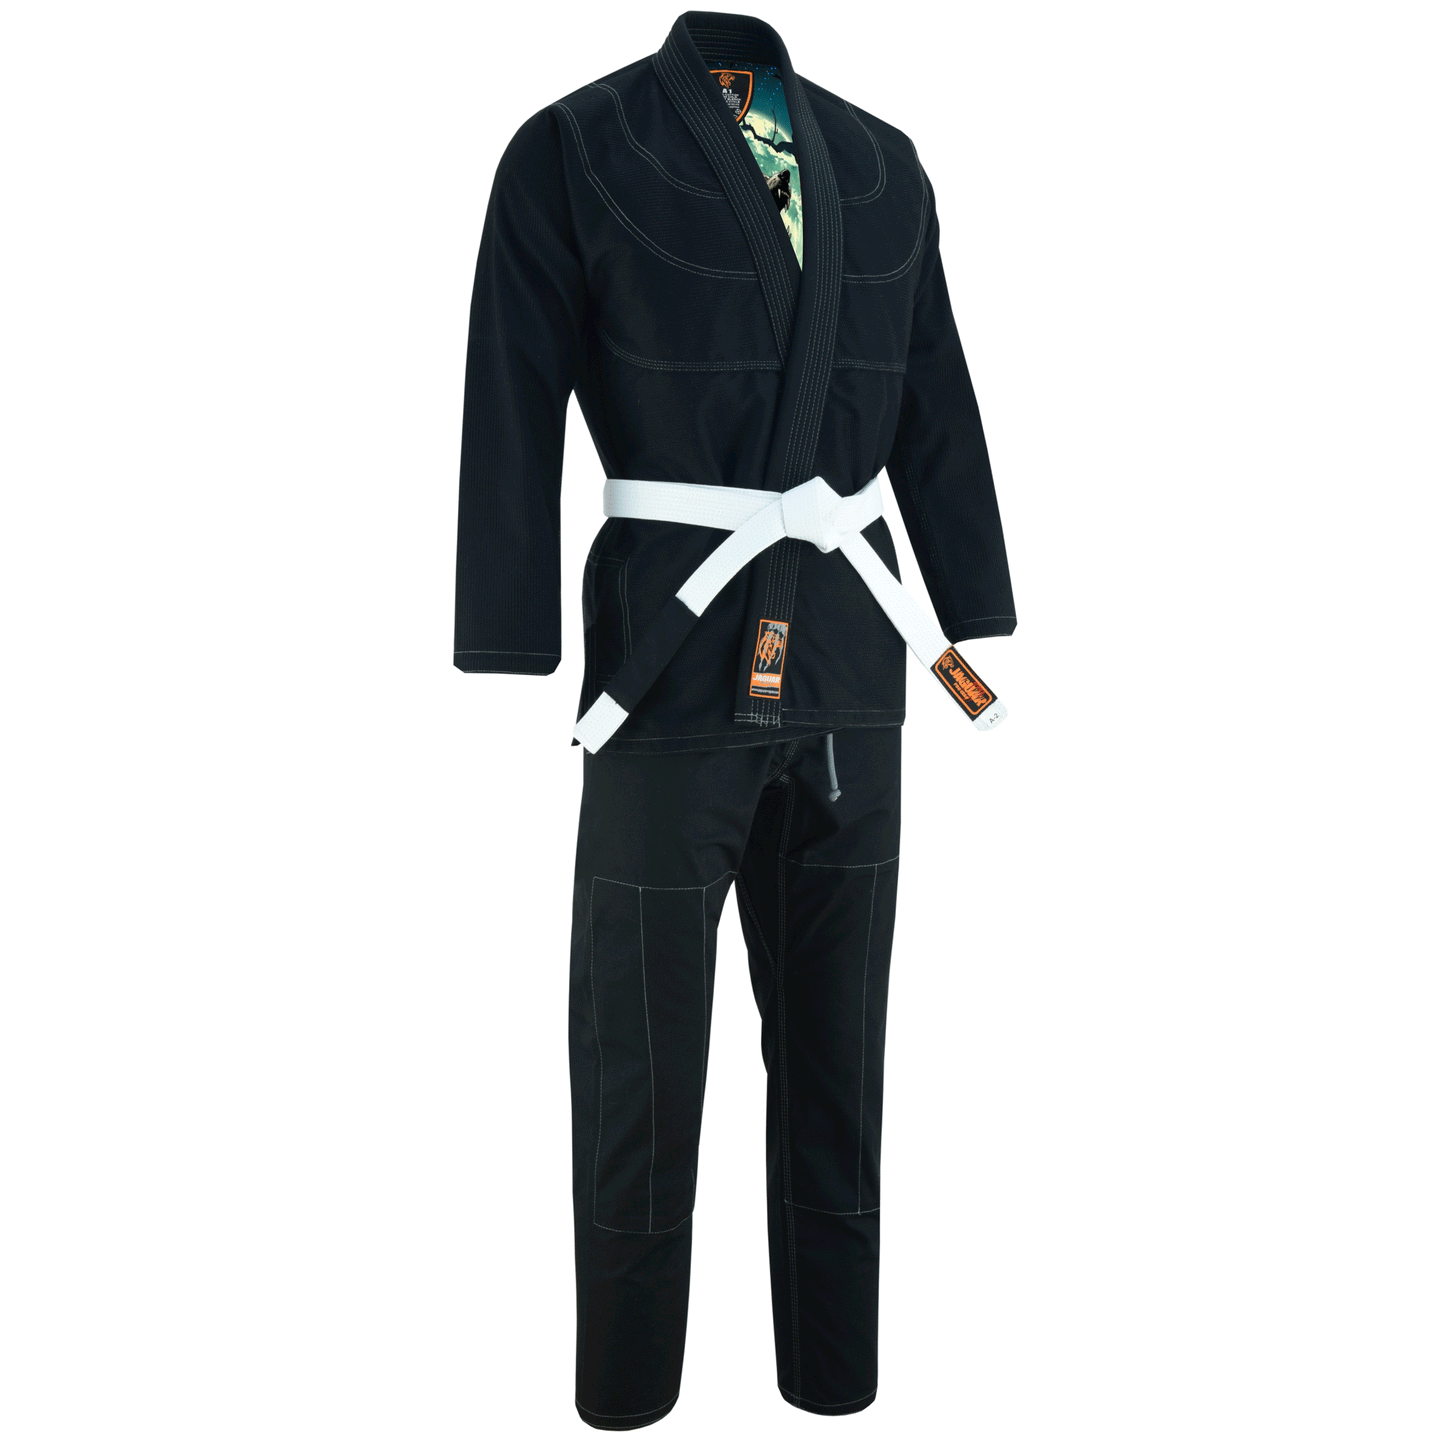 Jaguar Pro Gear - Scarry Wolf Inner Sublimated - Pro Brazilian Jiu Jitsu Kimono Gi Uniform Unisex